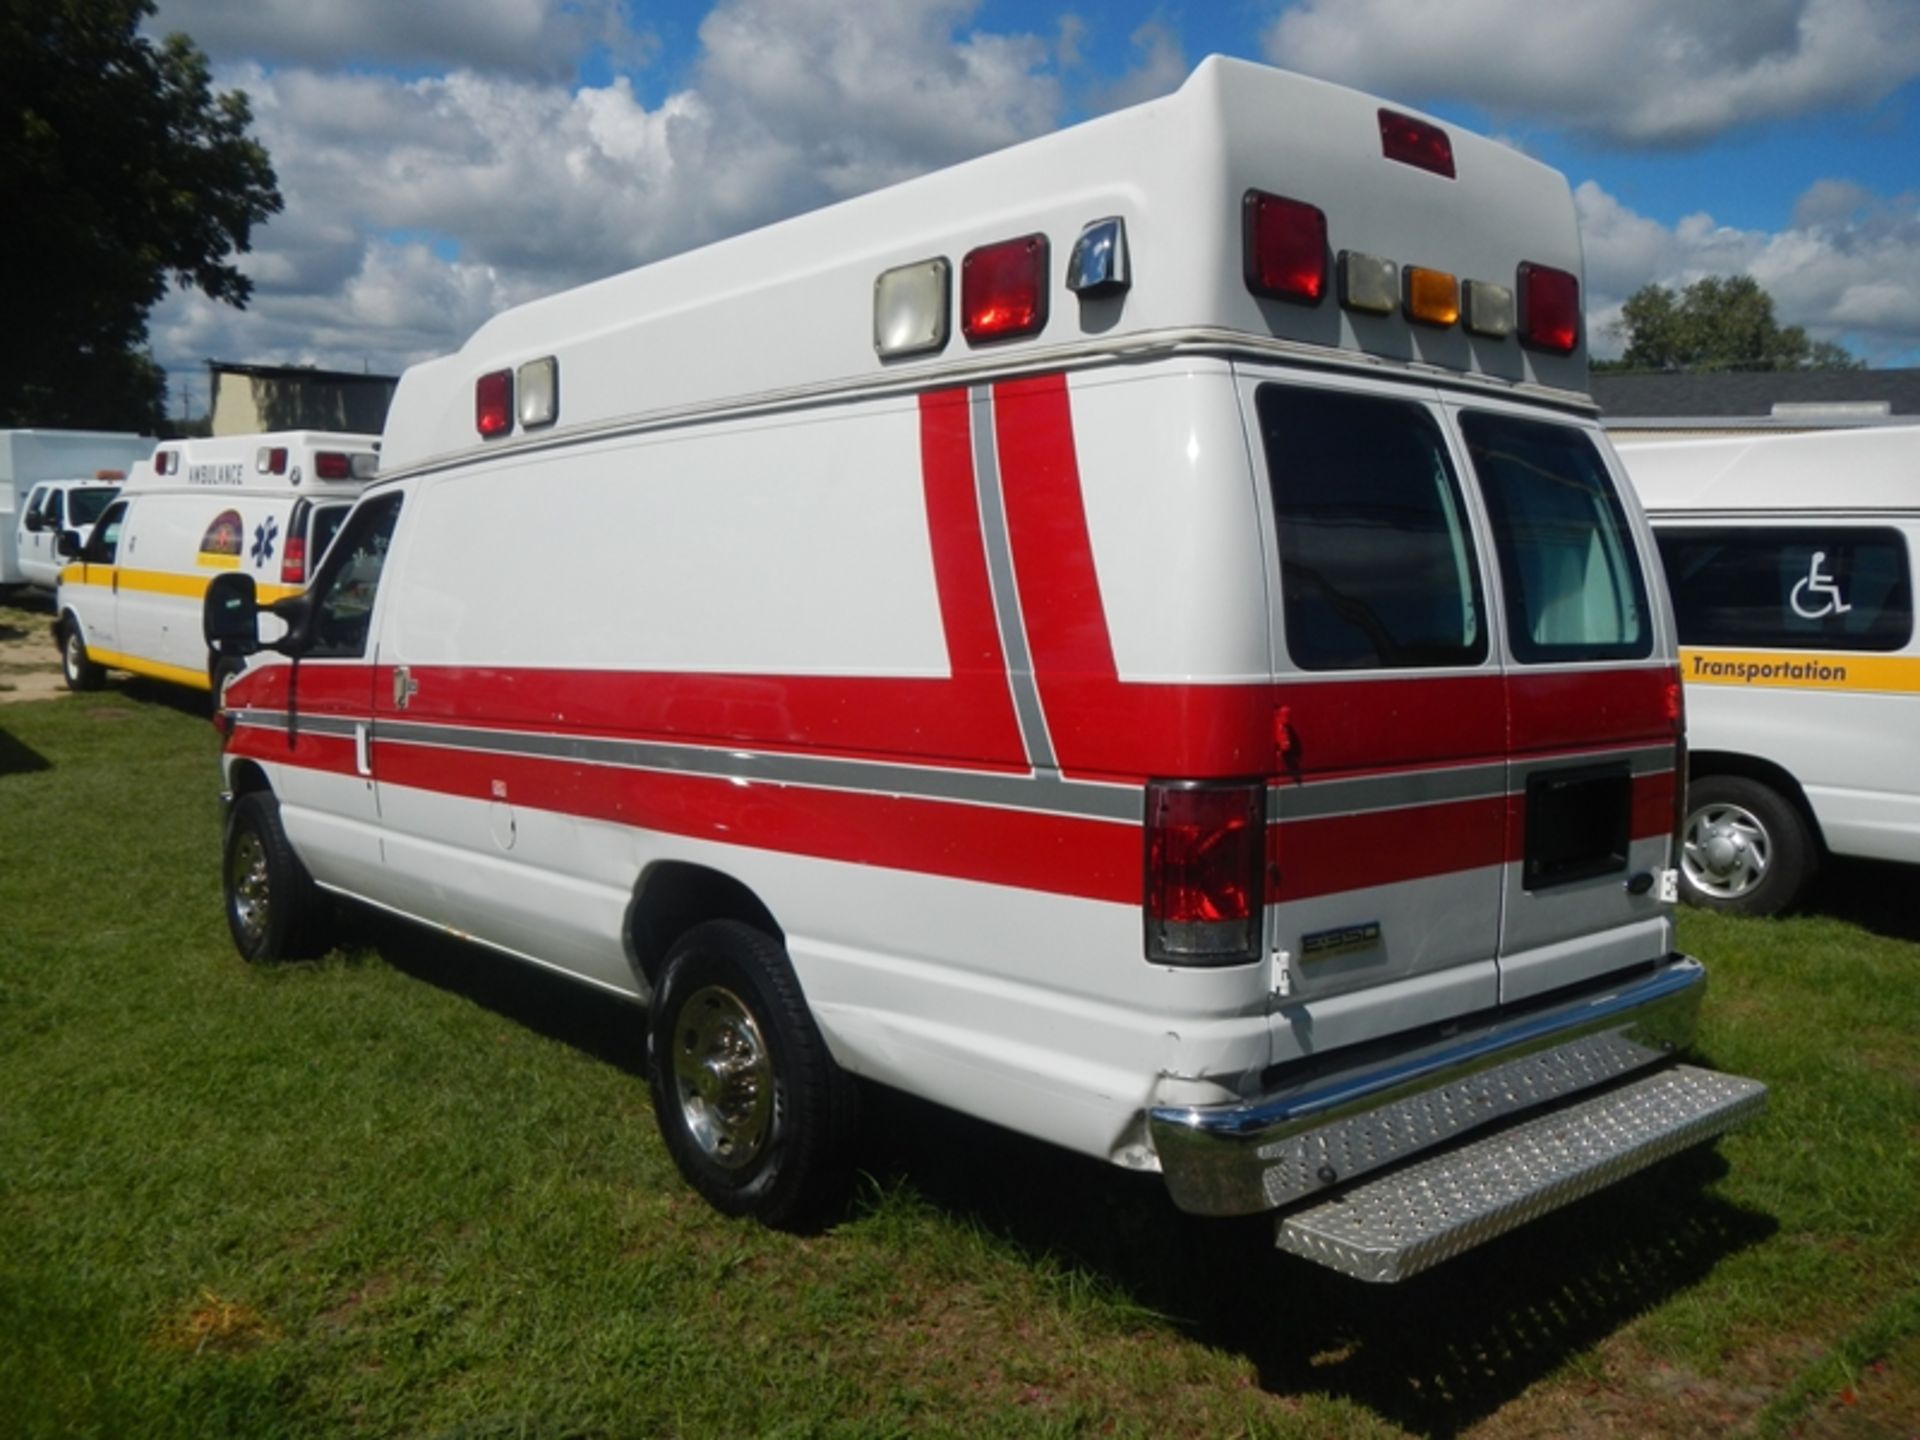 2010 Ford E350 Super Duty Type II Ambulance, dsl 220,124 miles - VIN: 1FDSS3EP6ADA41944 - Image 4 of 6